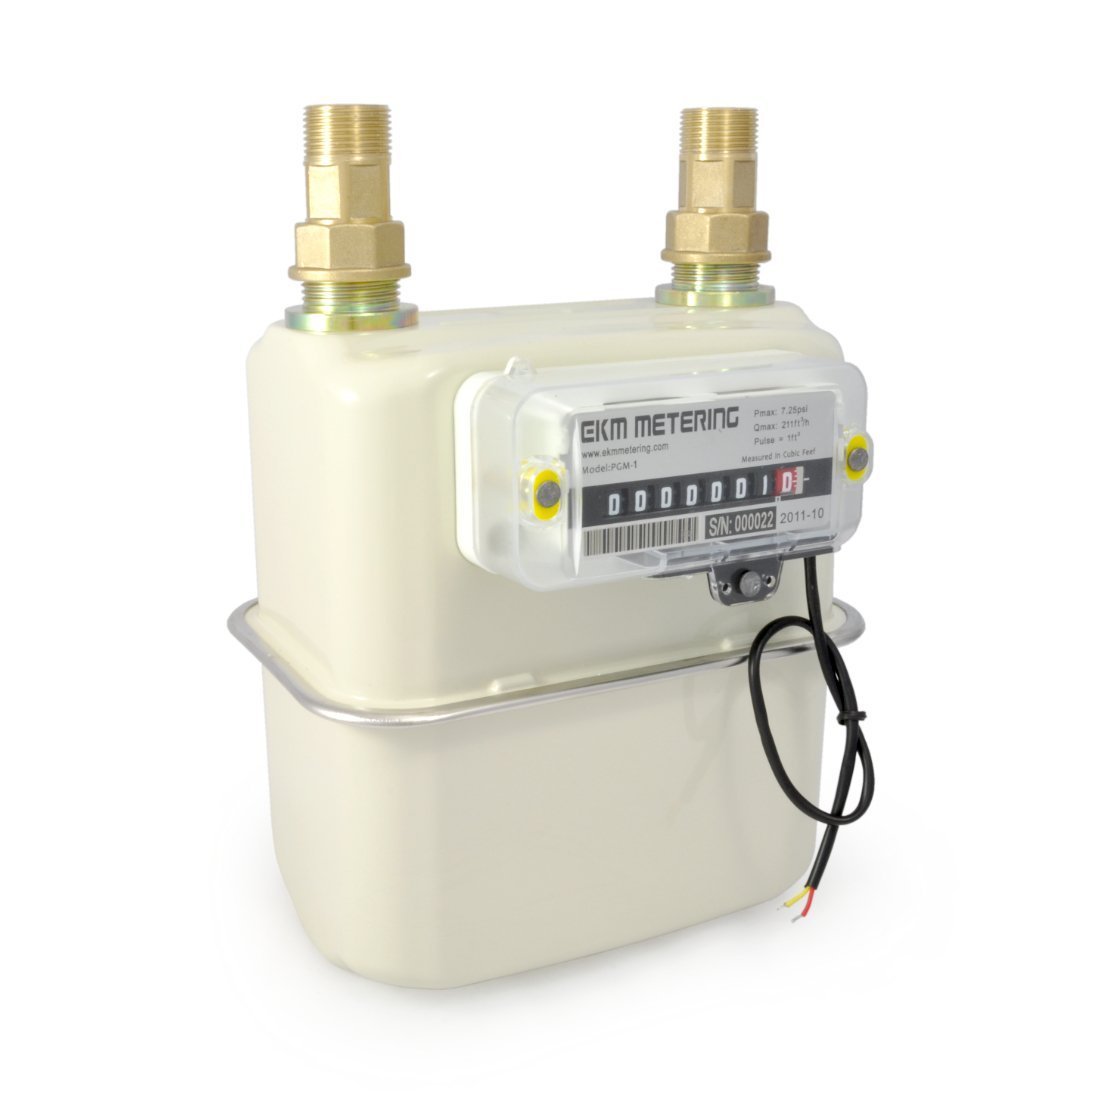 3/4" Pulse Output Gas Meter - PGM-075 - EKM Metering Inc.